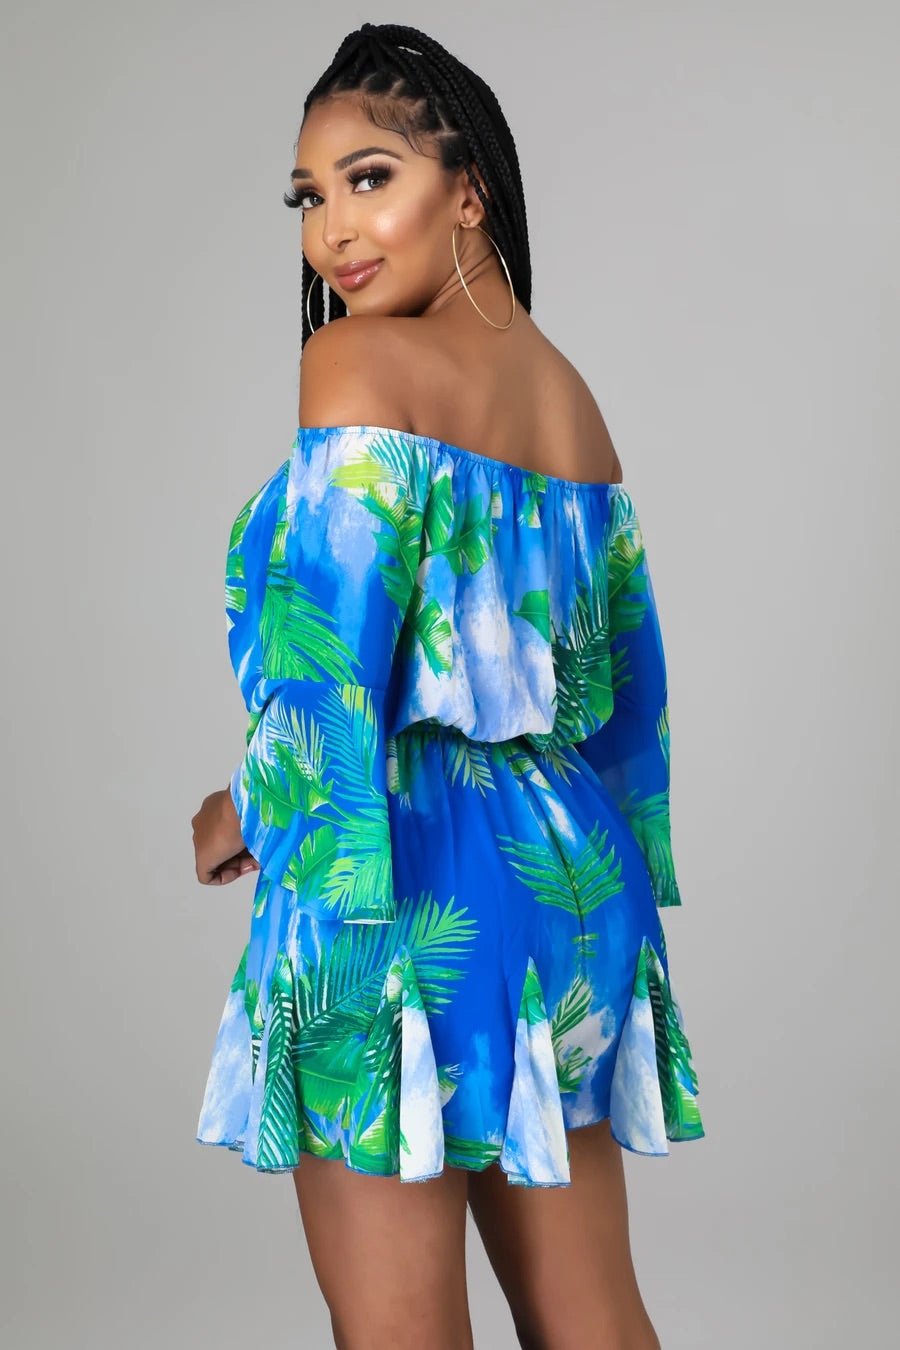 Palma Mar Off The Shoulder Tropical Romper Multicolor Blue - Ali’s Couture 